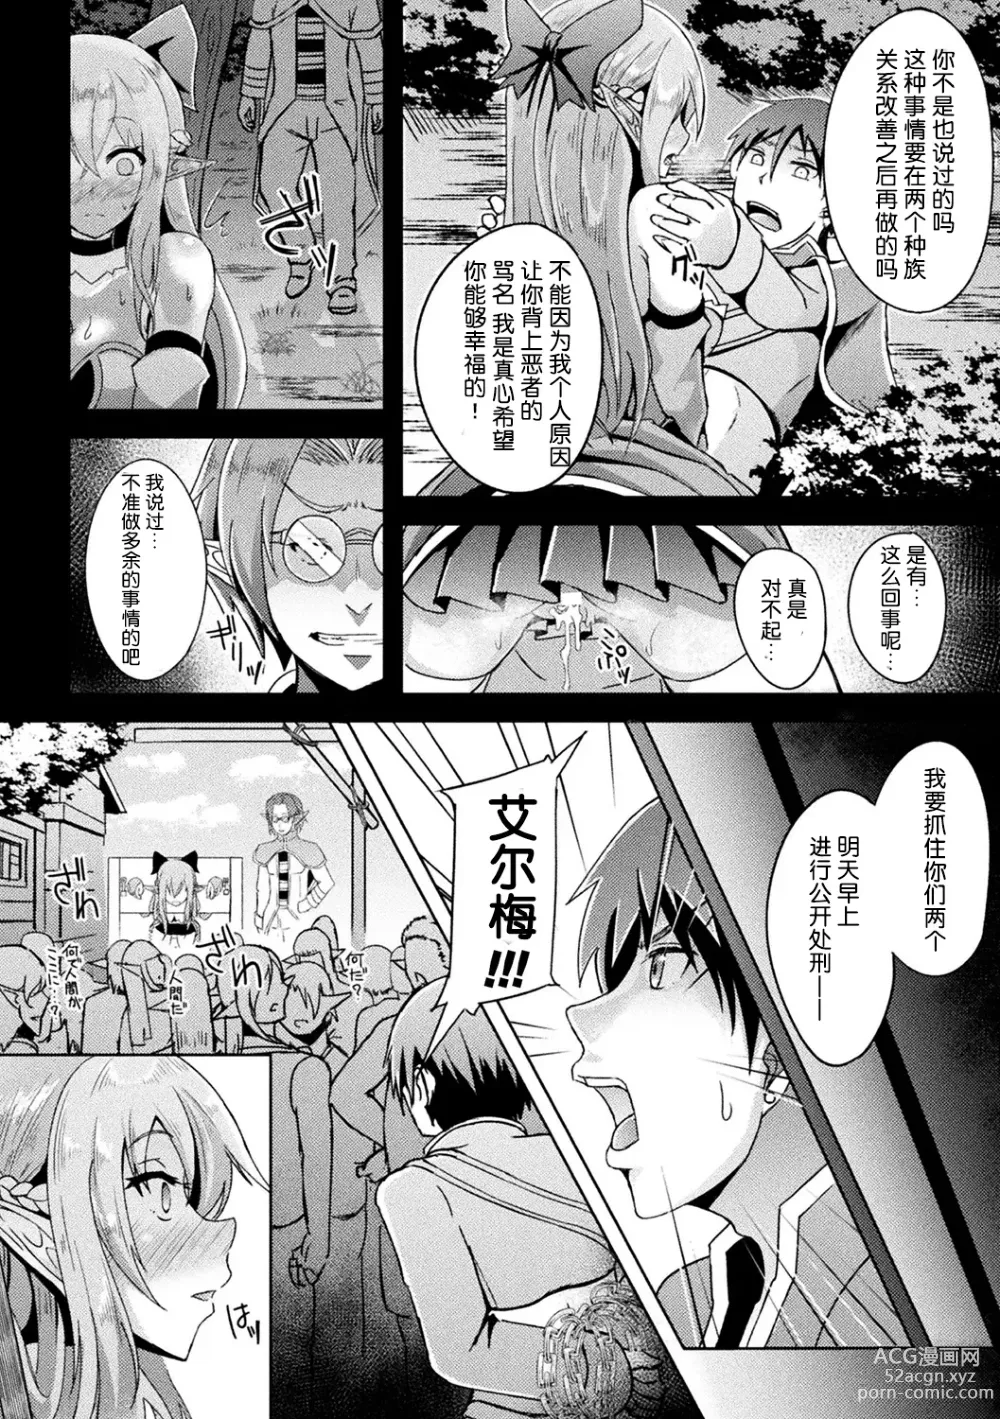 Page 12 of manga 精靈族良家公主殿下薬漬け公開陵辱